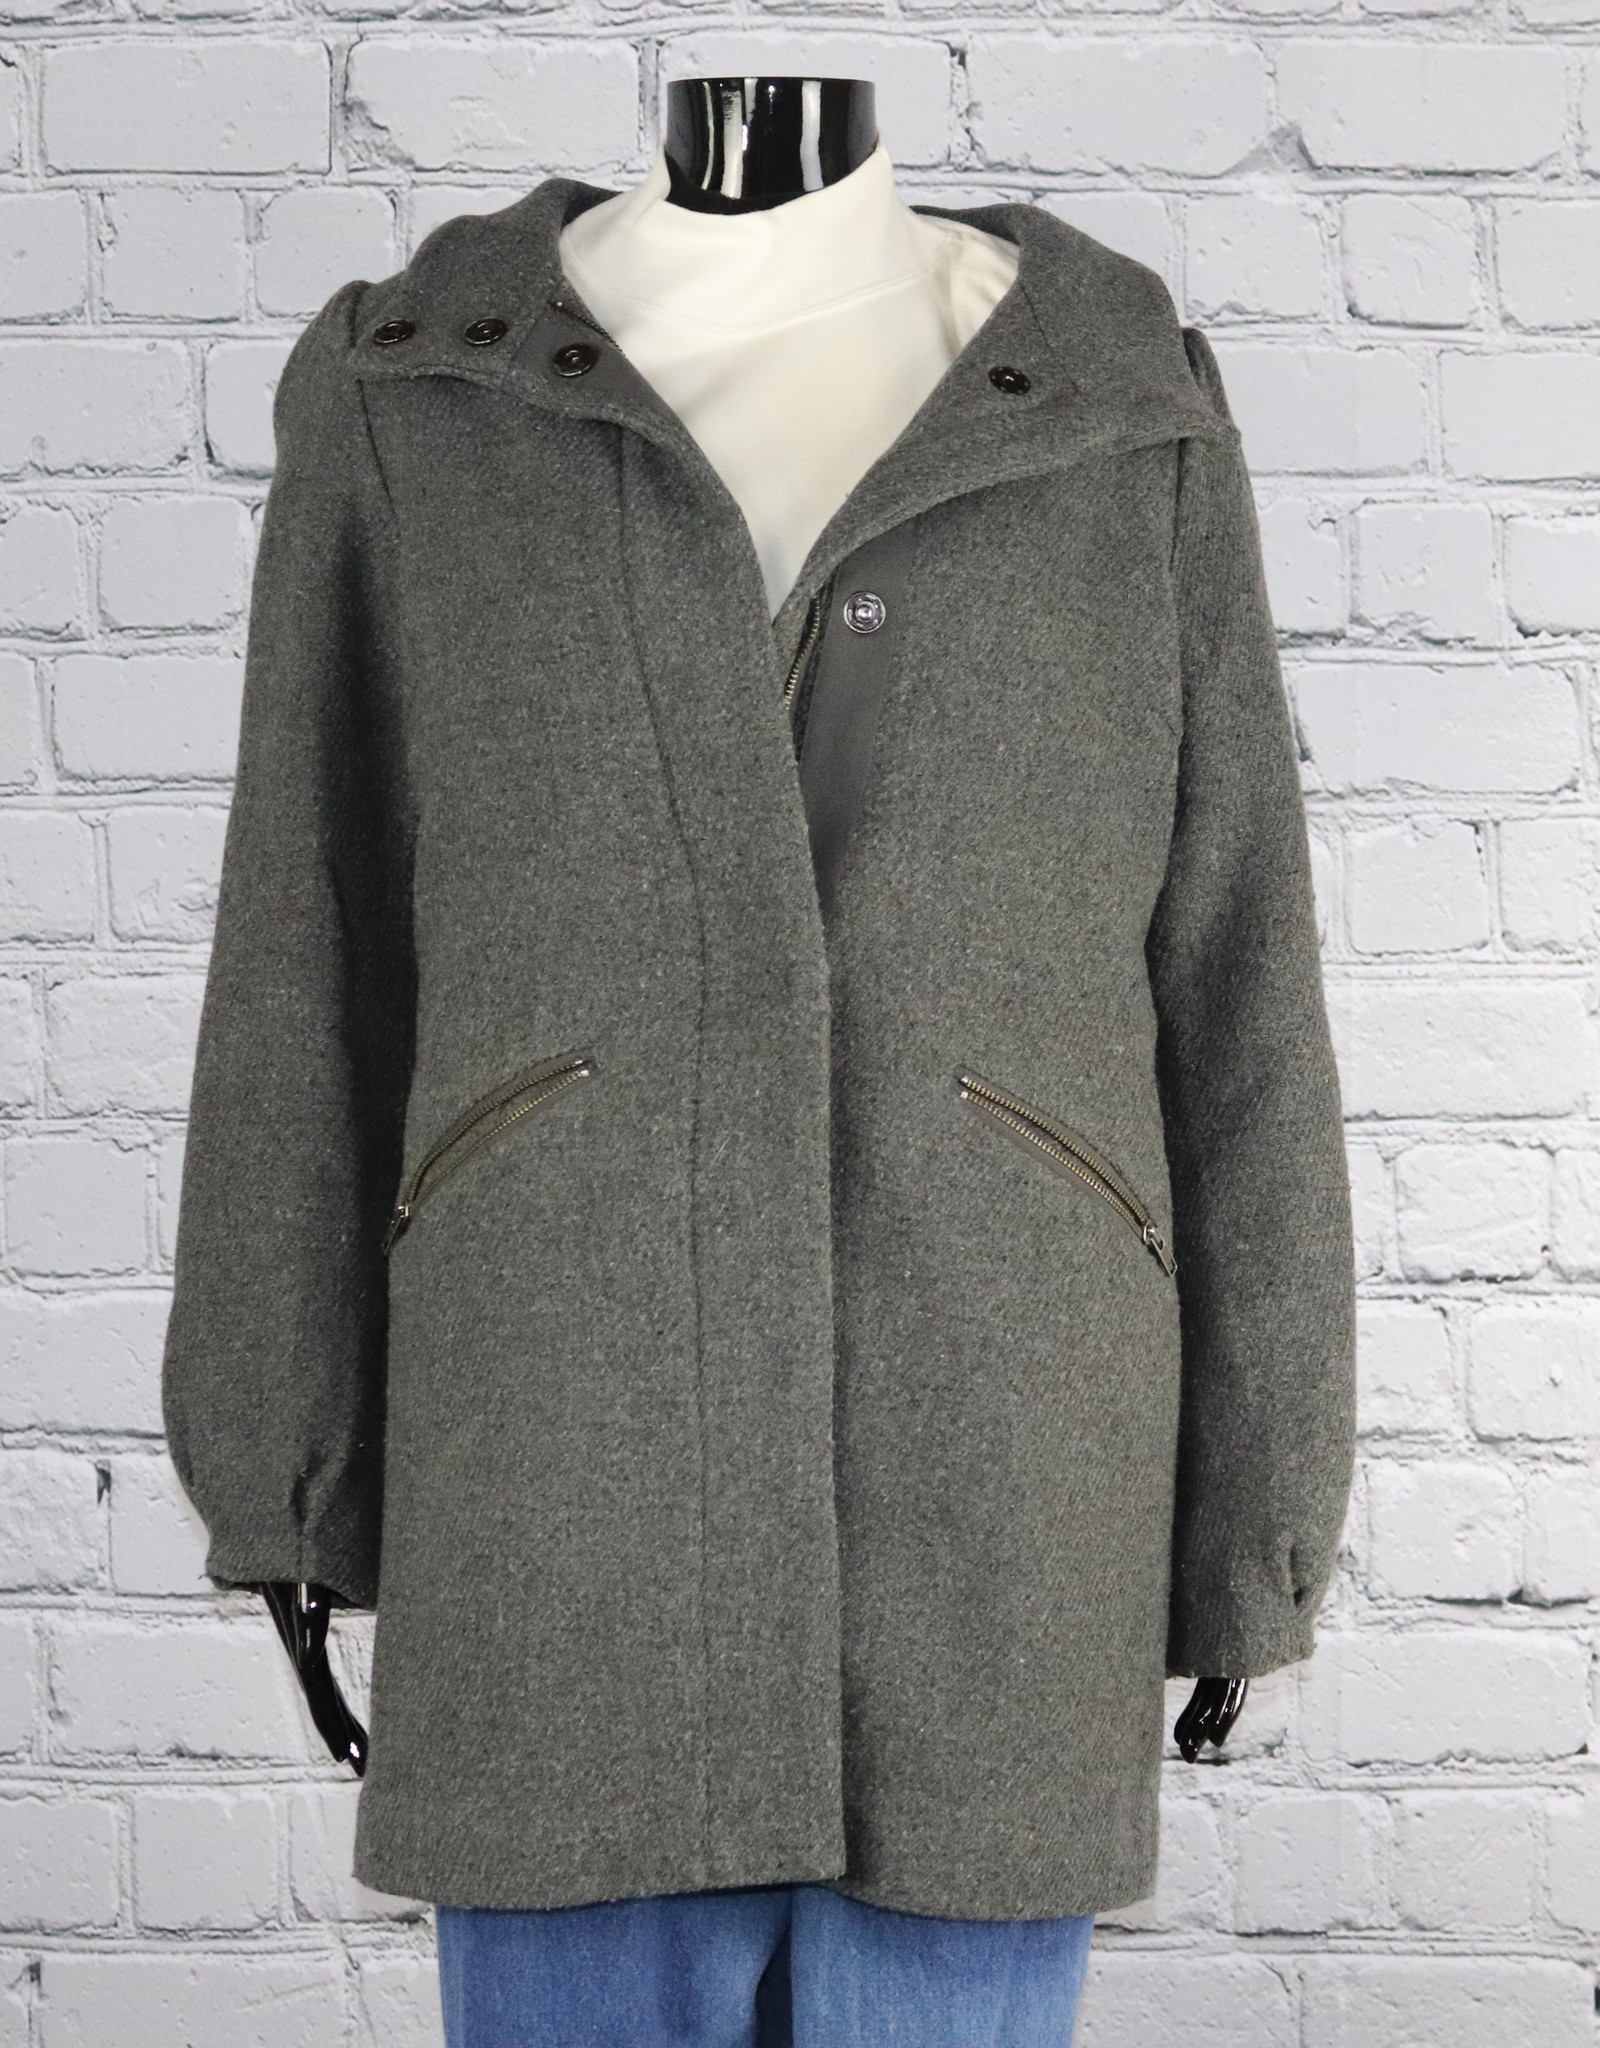 H&M: Vintage Grey Wool Blend Pea Coat for Gals